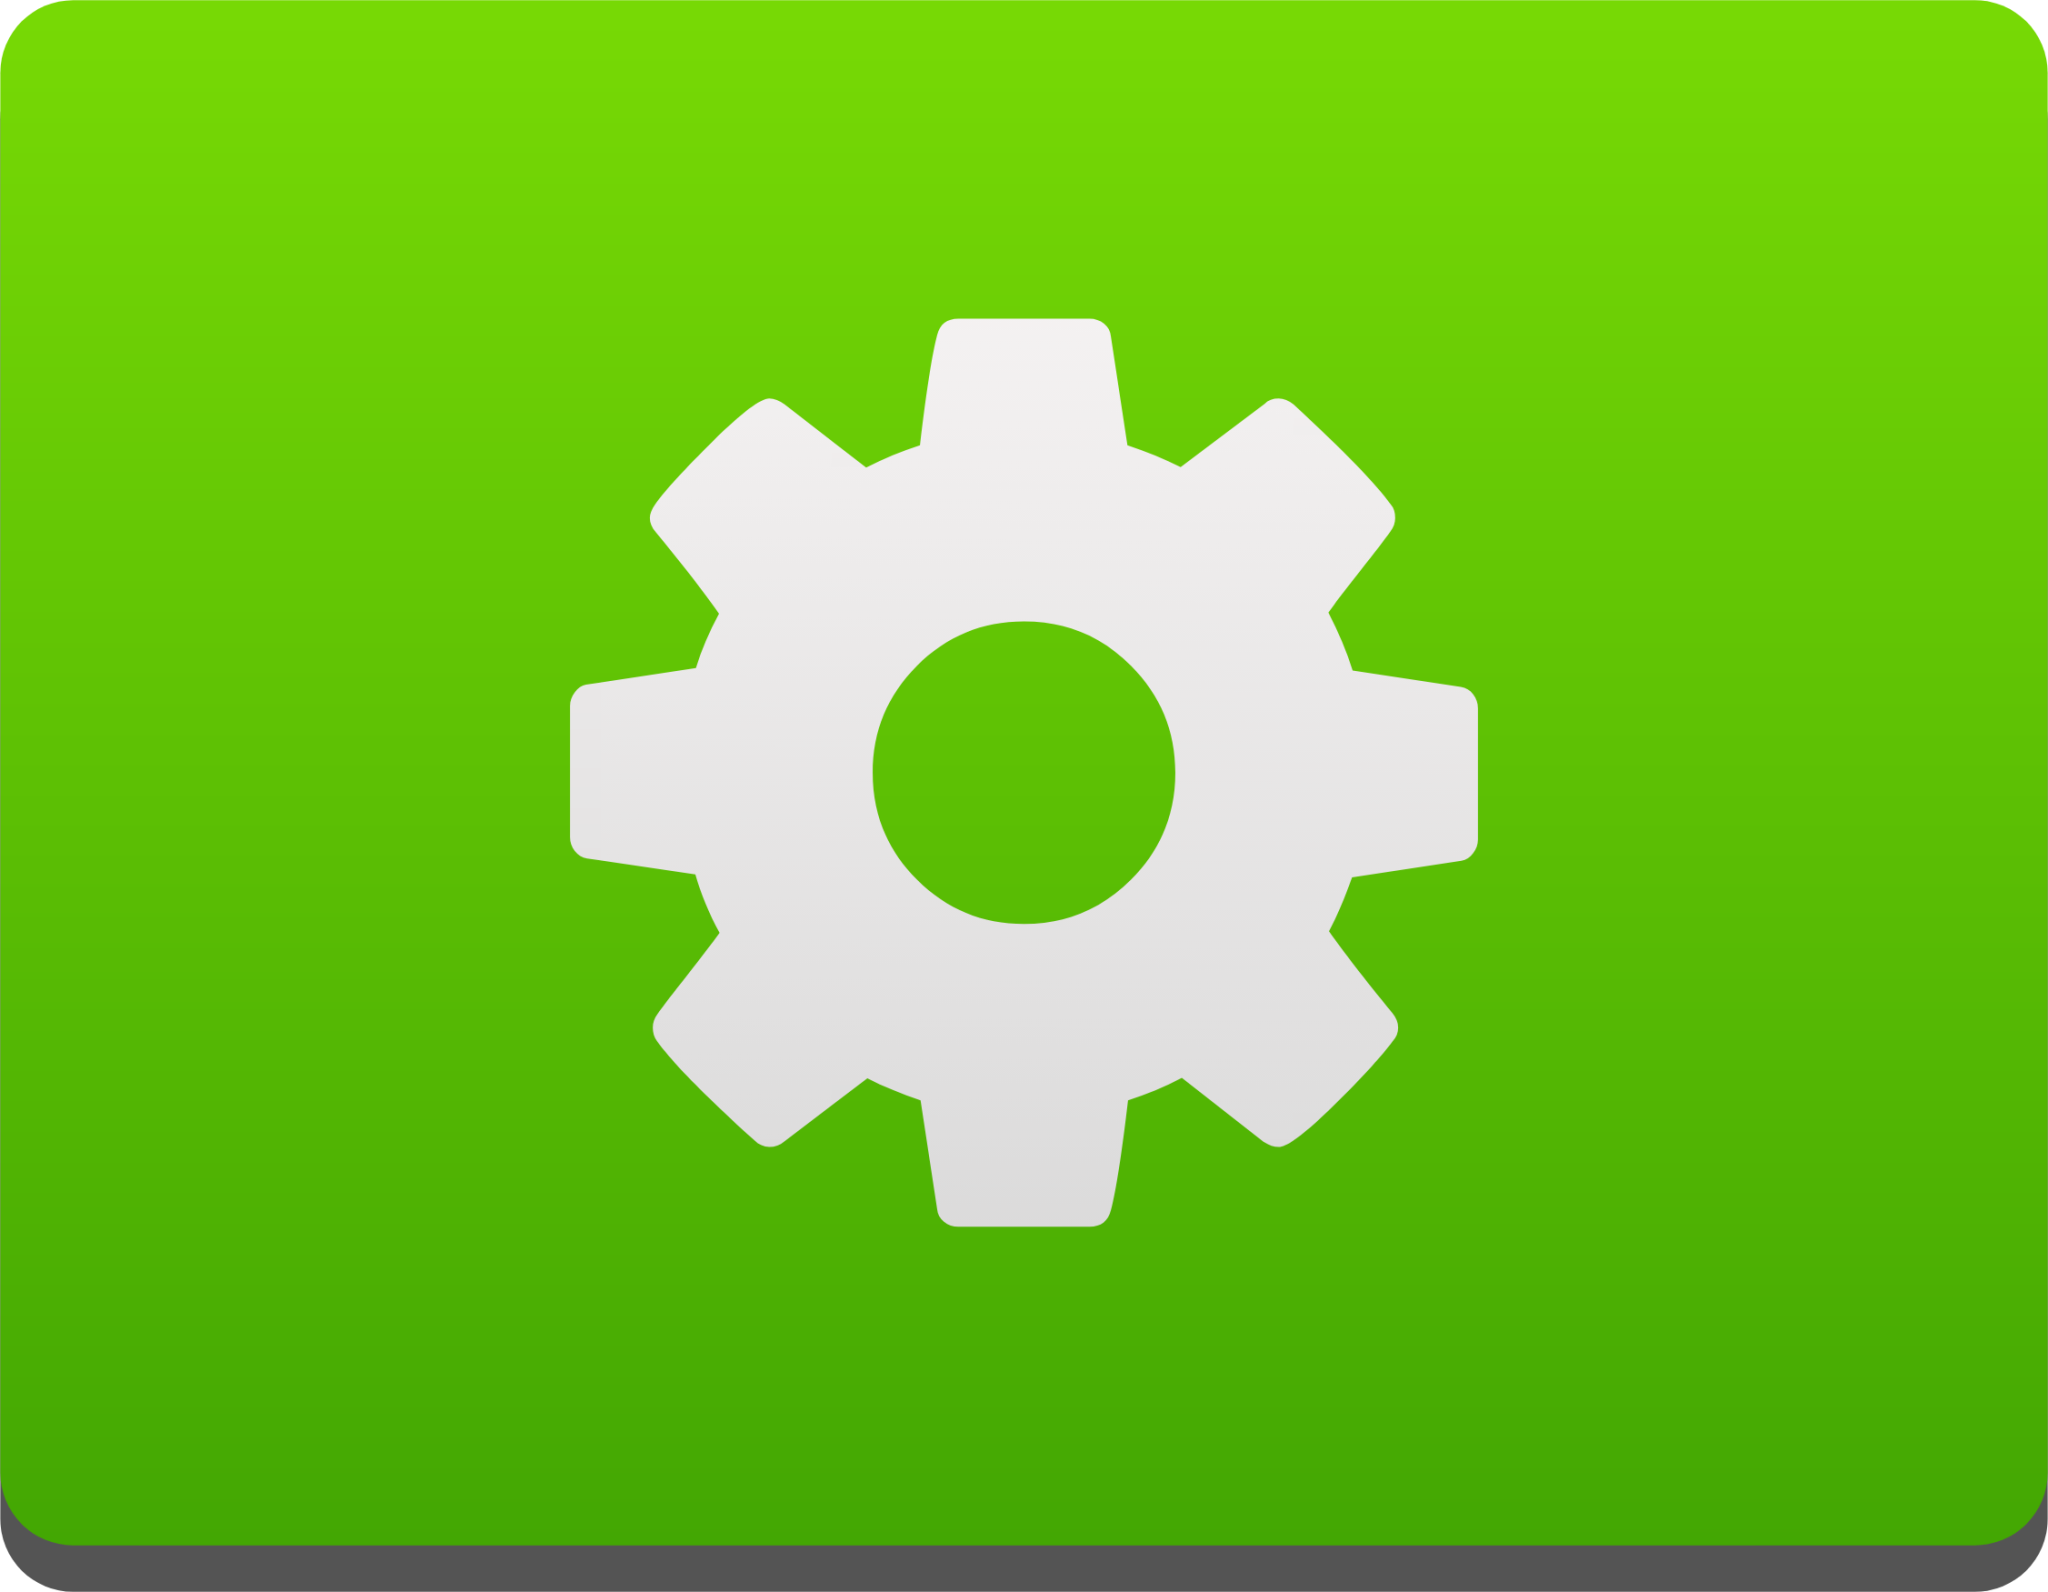 application default icon icon